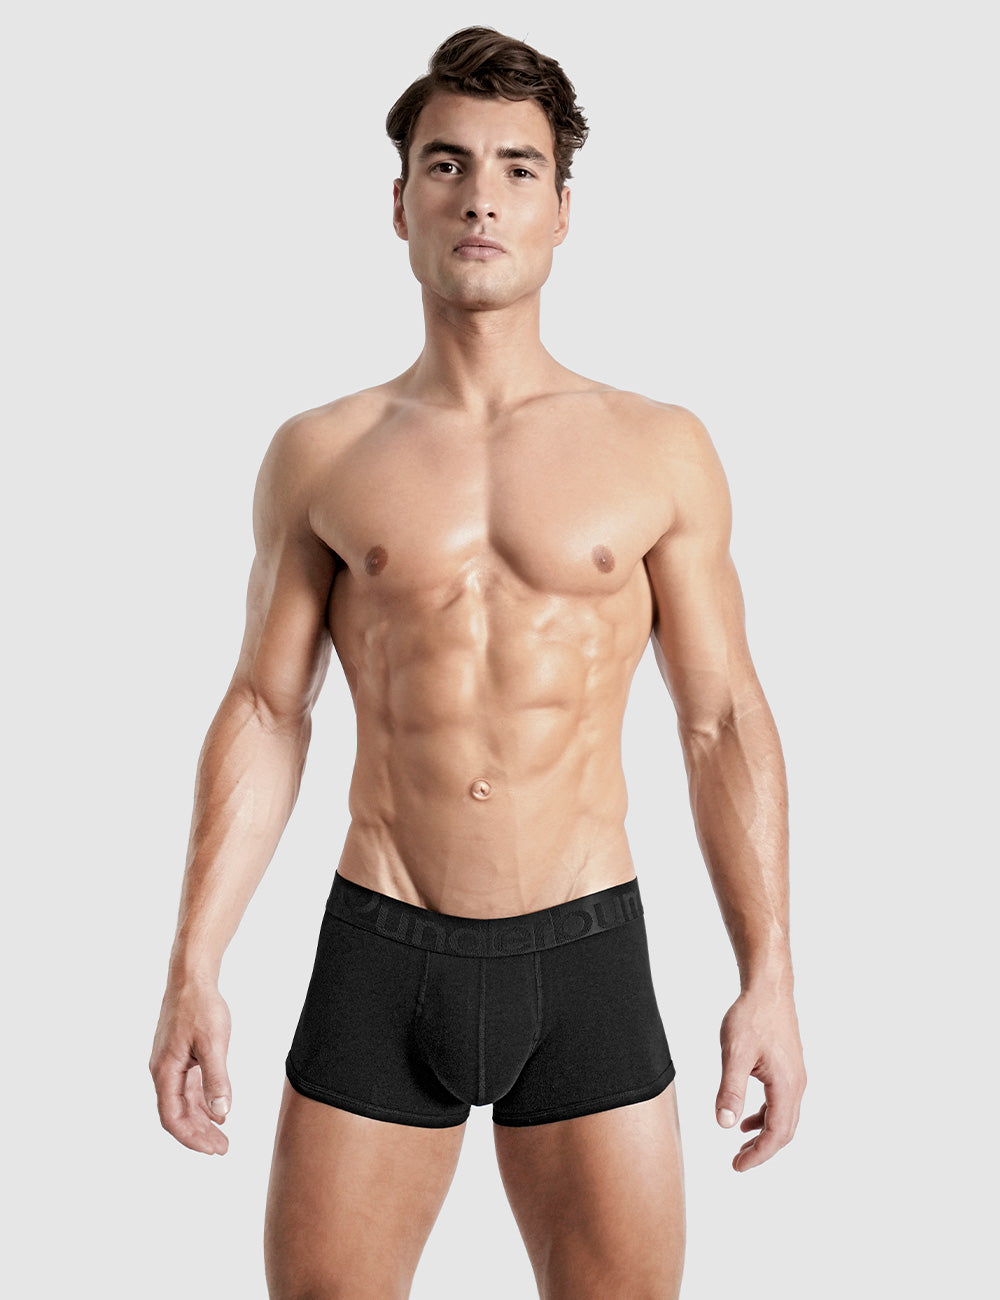 Rounderbum Package Tech Underwear – Rounderbum LLC